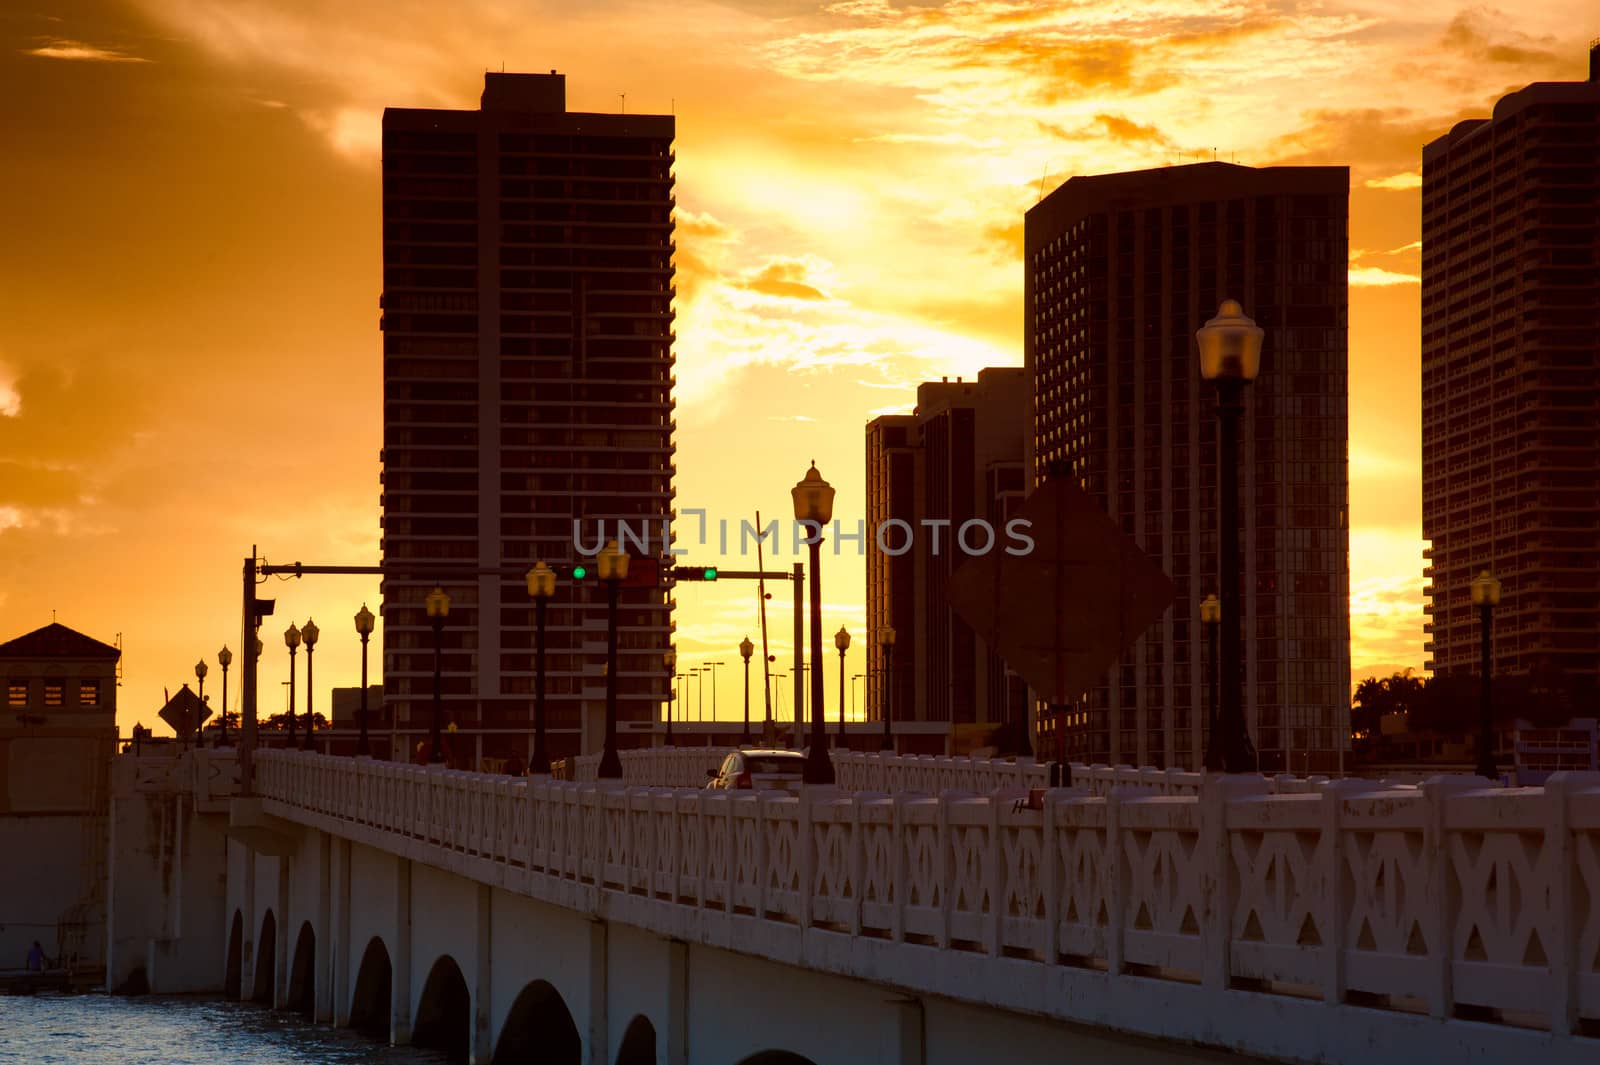 Skyscrapers in a city, Venetian Causeway, Venetian Islands, Biscayne Bay, Miami, Florida, USA